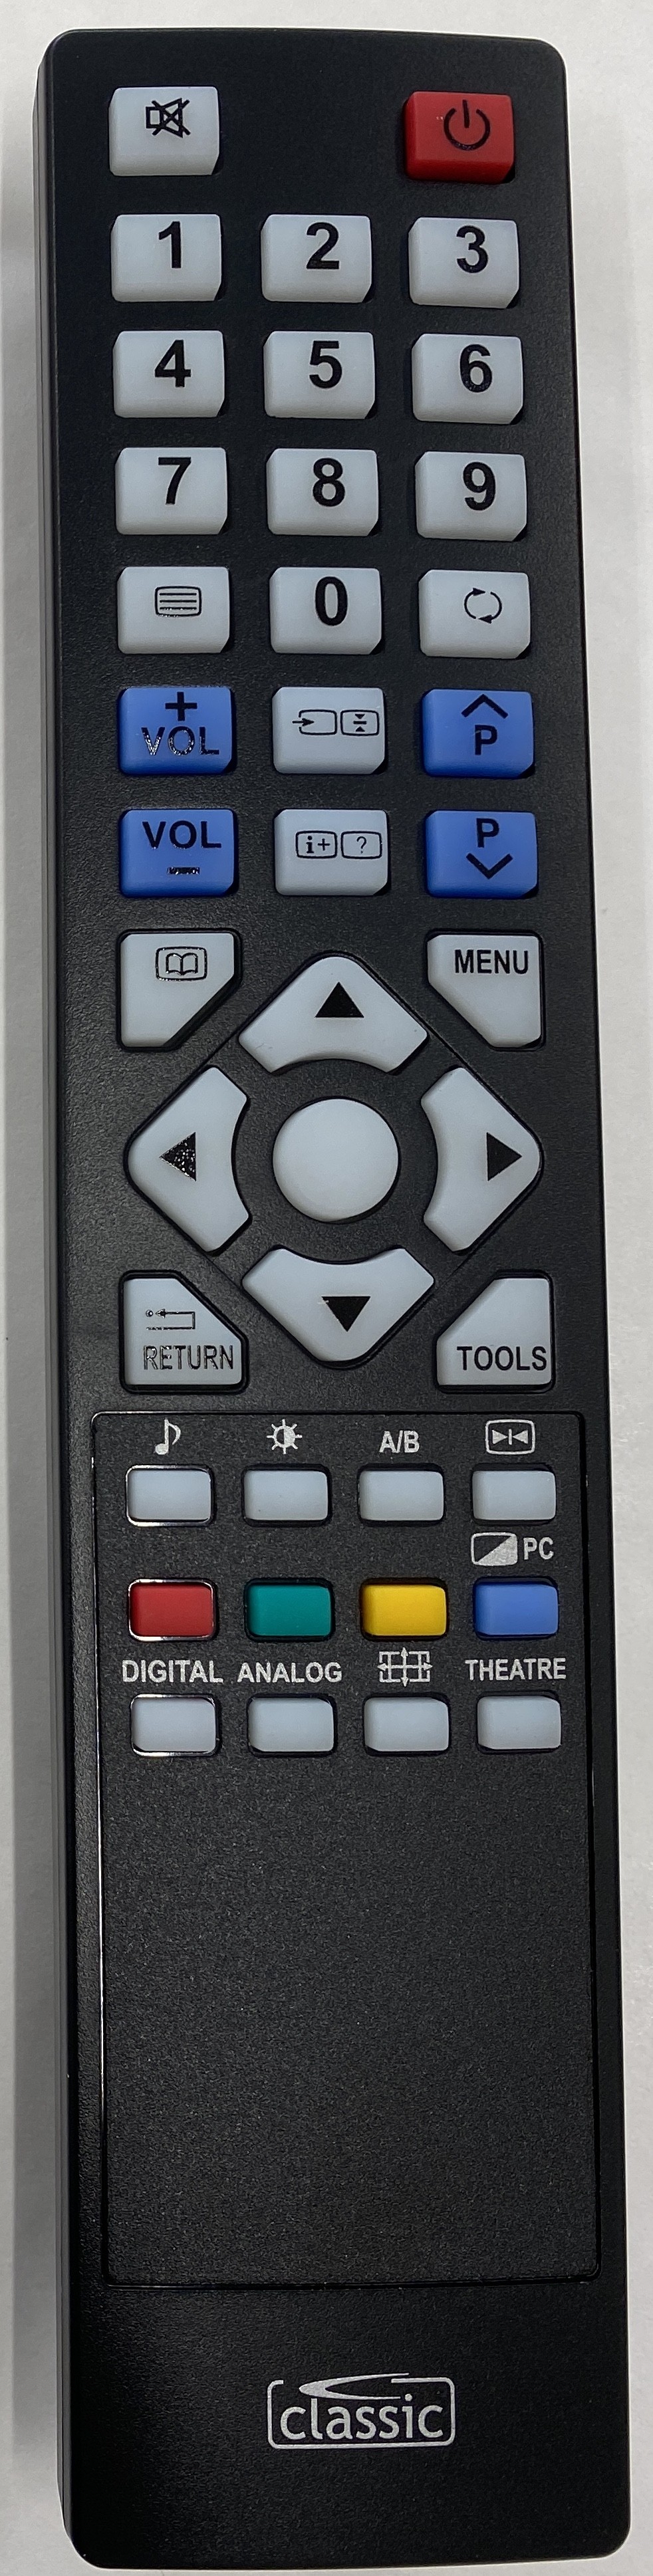 SONY RM-ED008 Remote Control Alternative